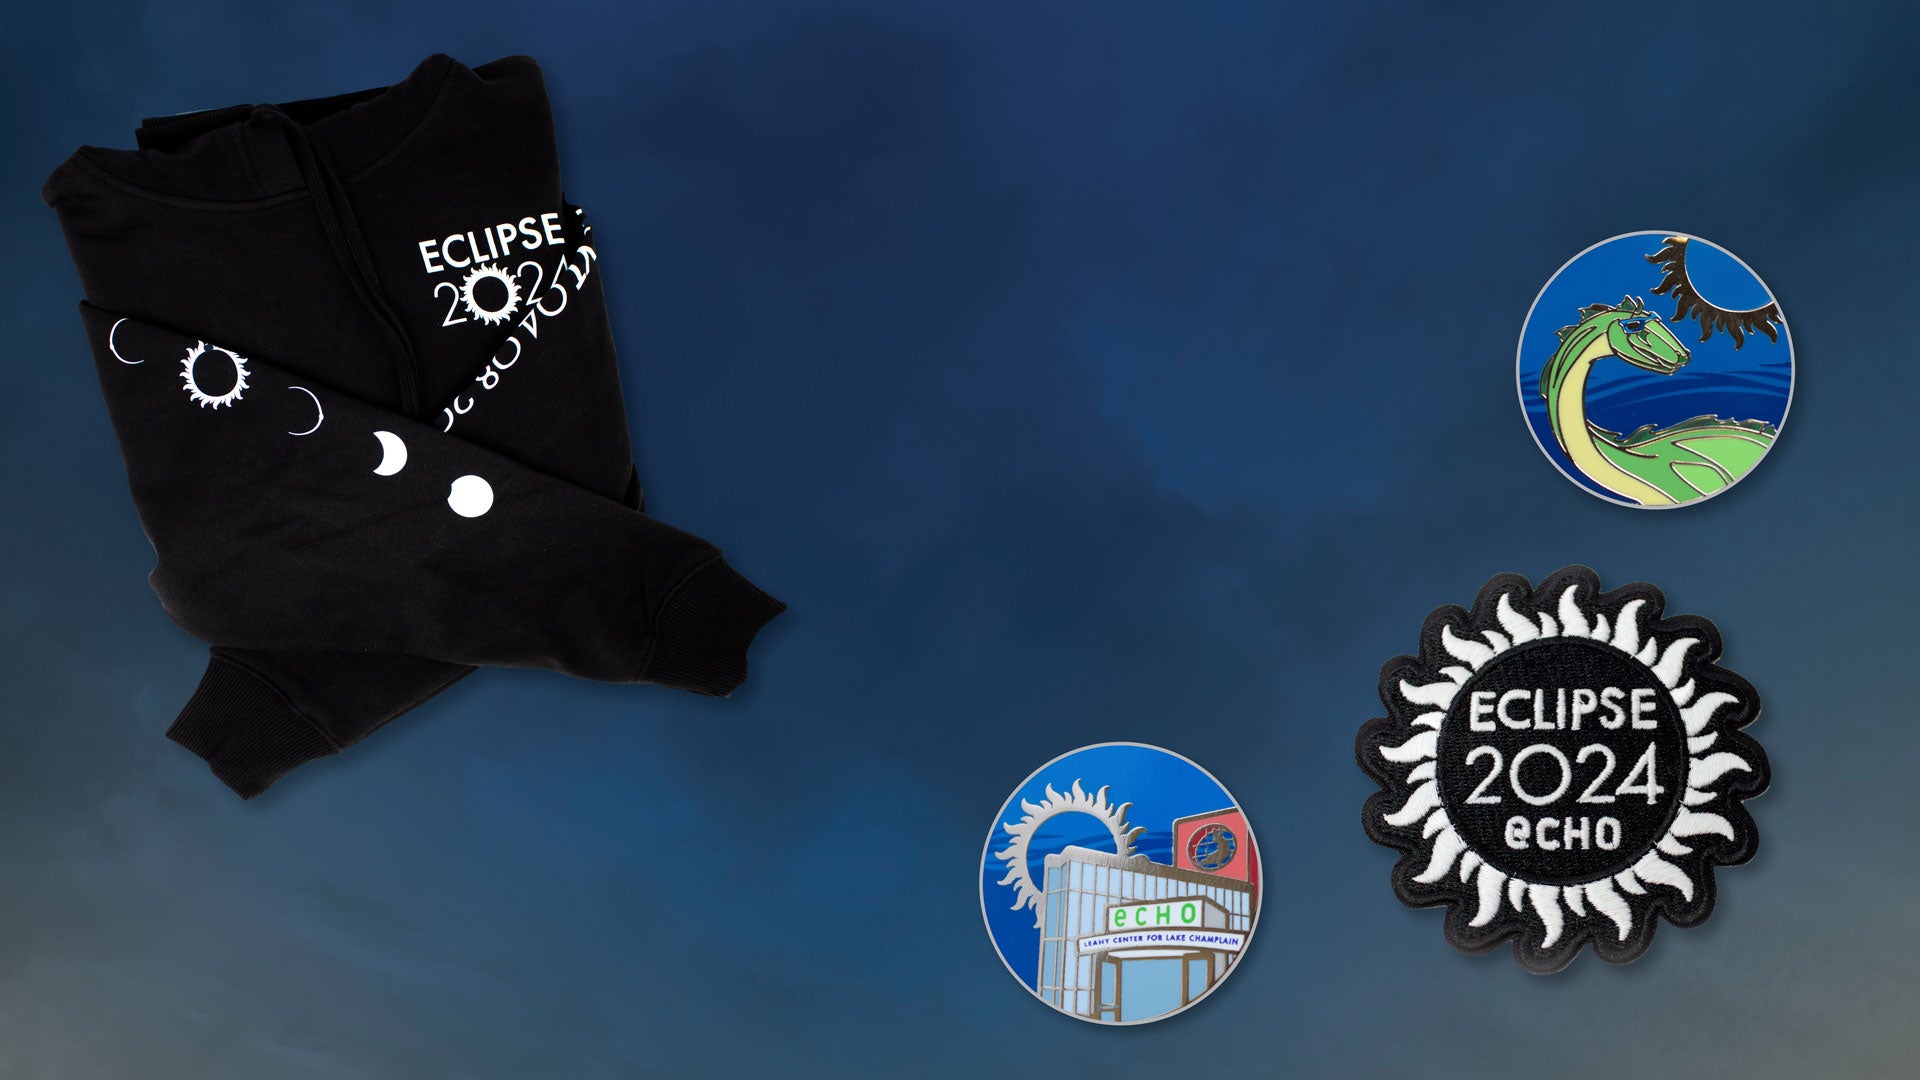 Eclipse sweatshirt, ECHO eclipse pin, Champ eclipse pin, Eclipse 2024 ECHO patch